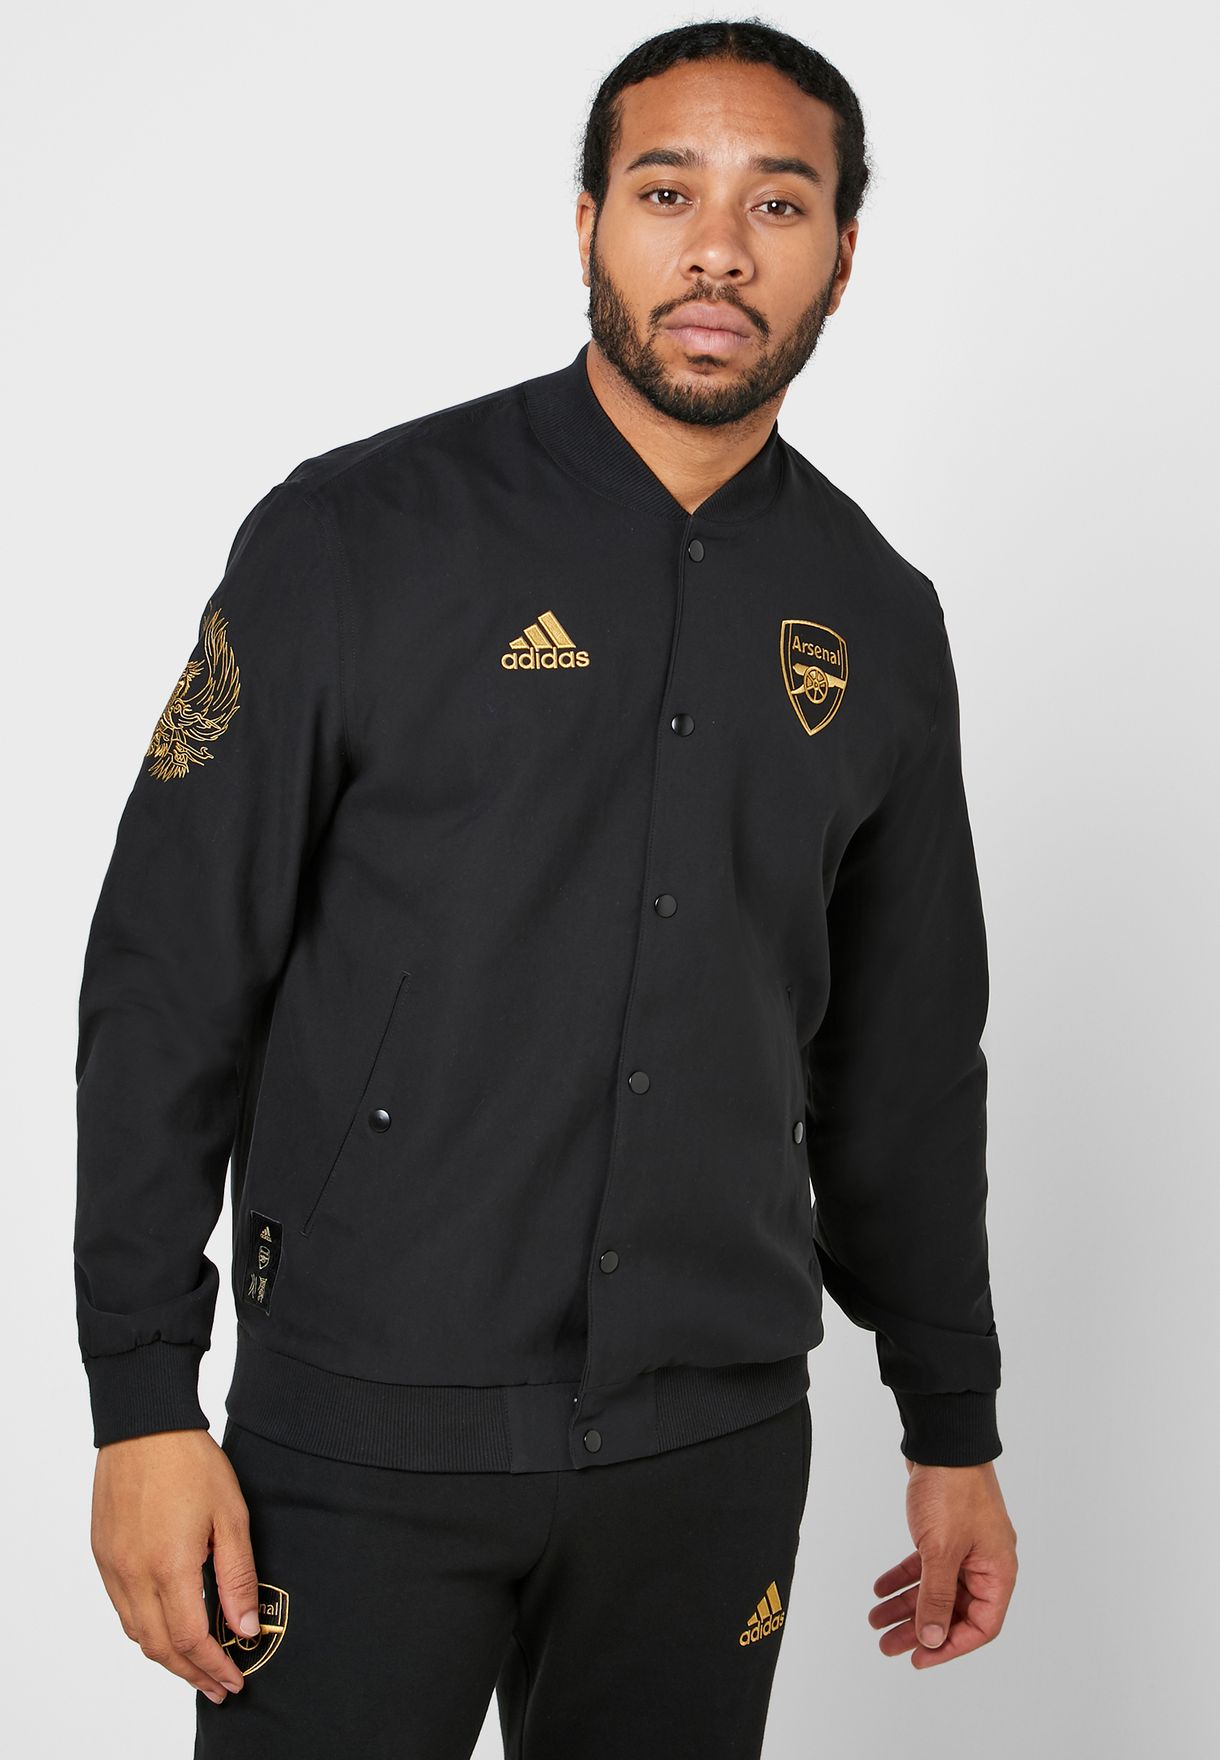 arsenal black adidas jacket